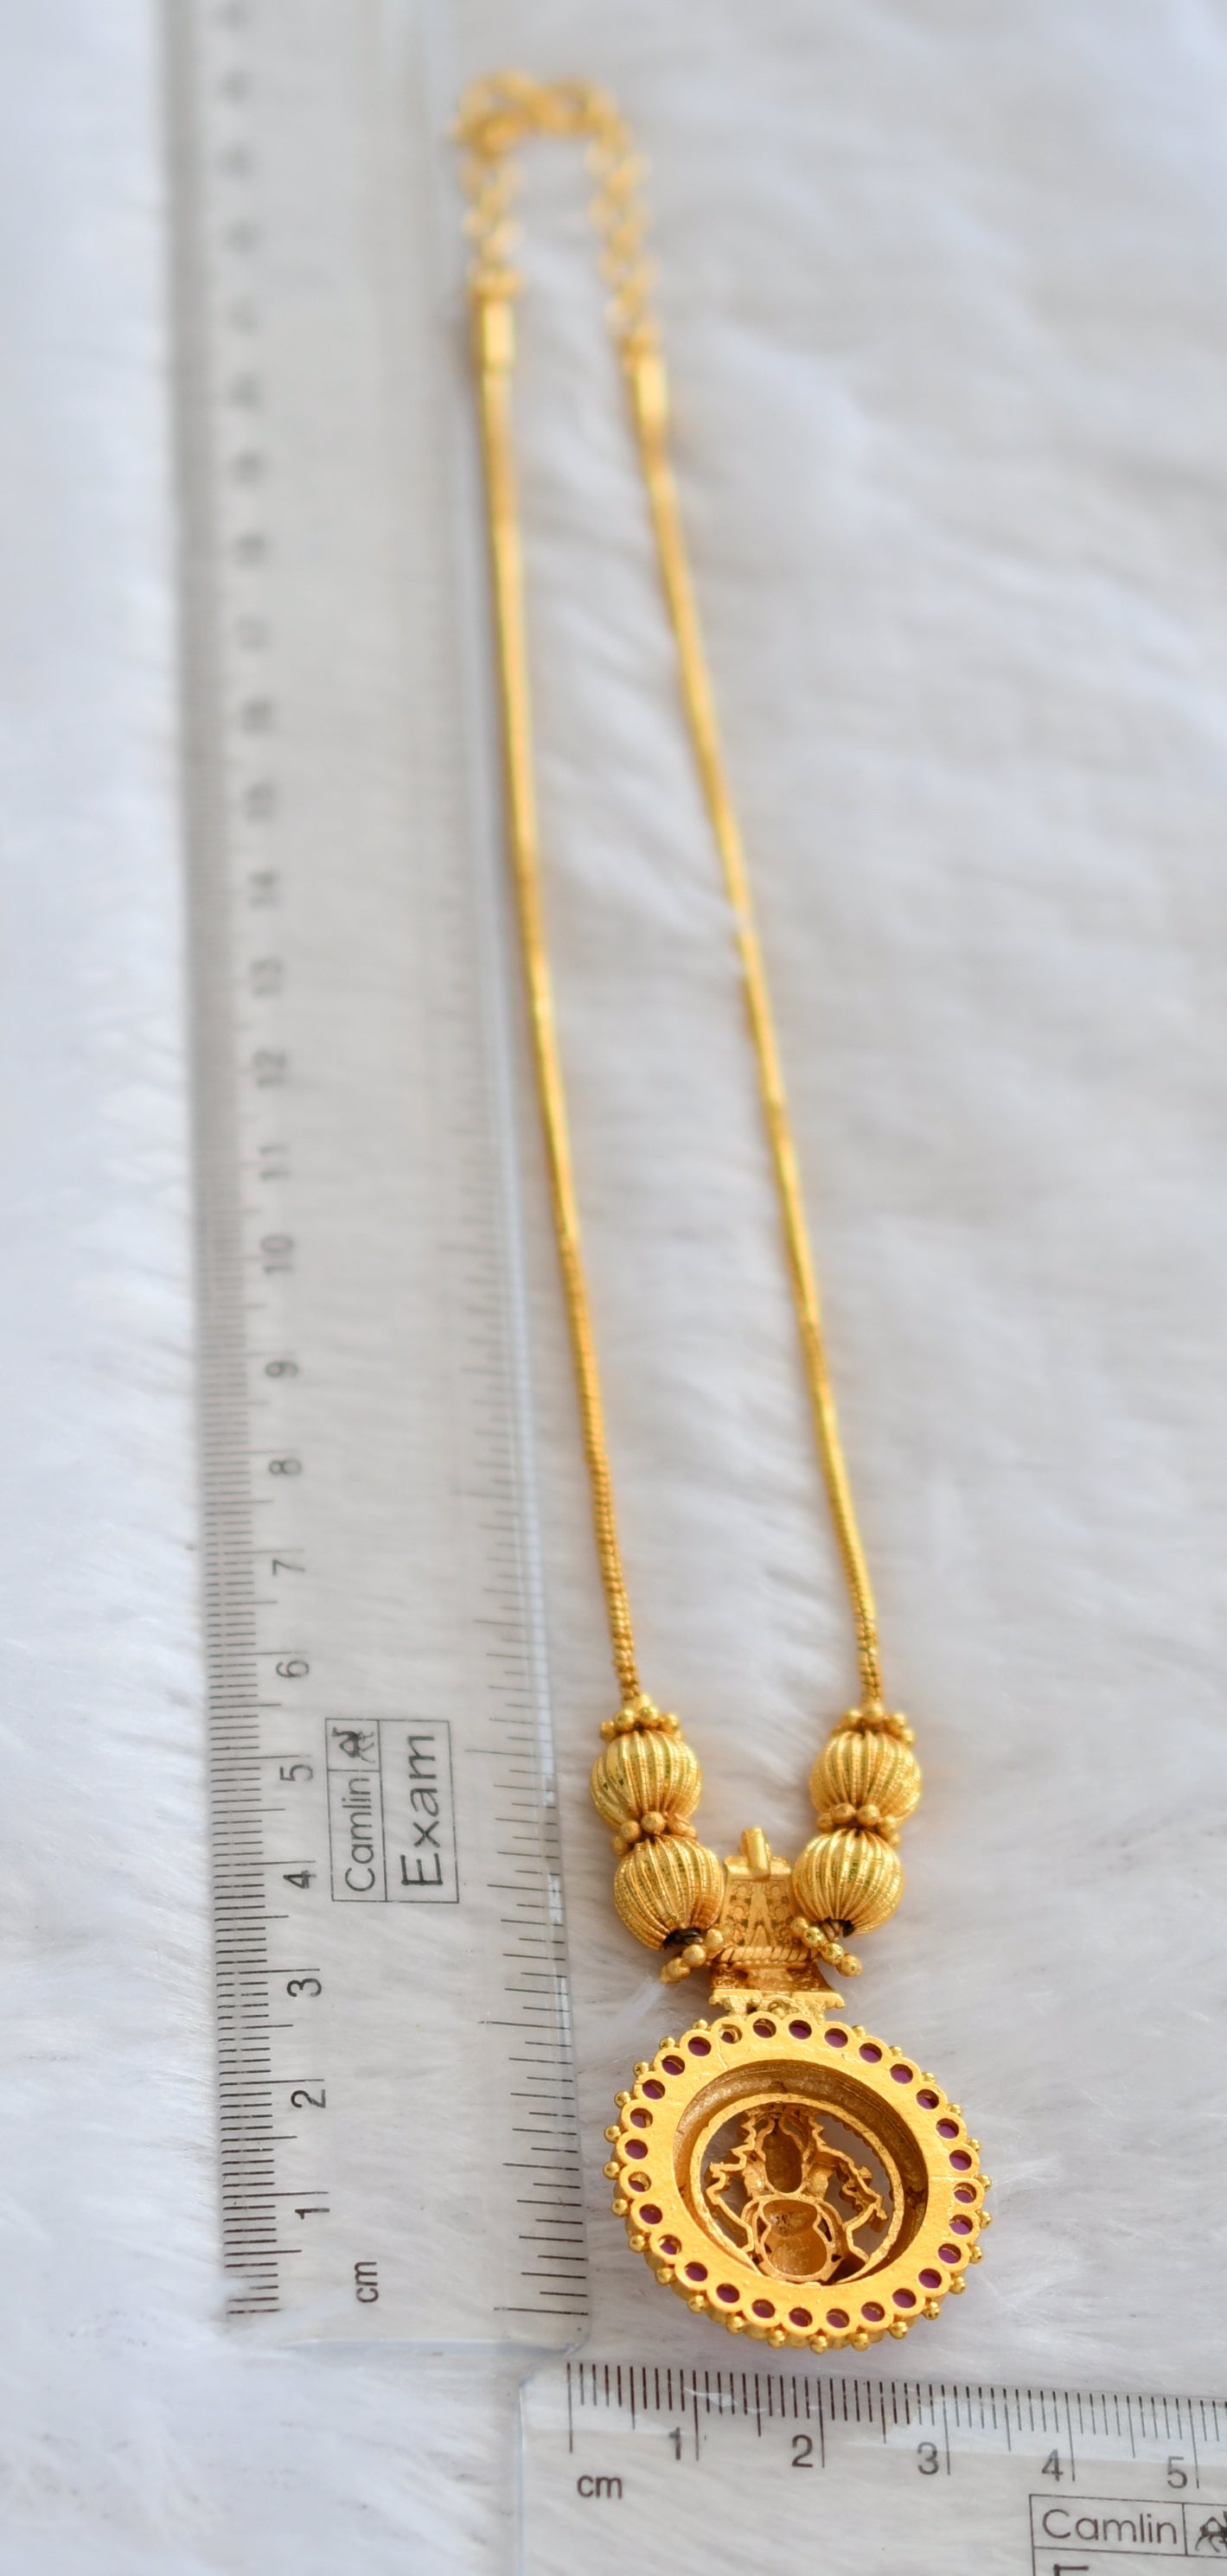 Gold tone ruby kerala style ganesha kodi necklace dj-46355